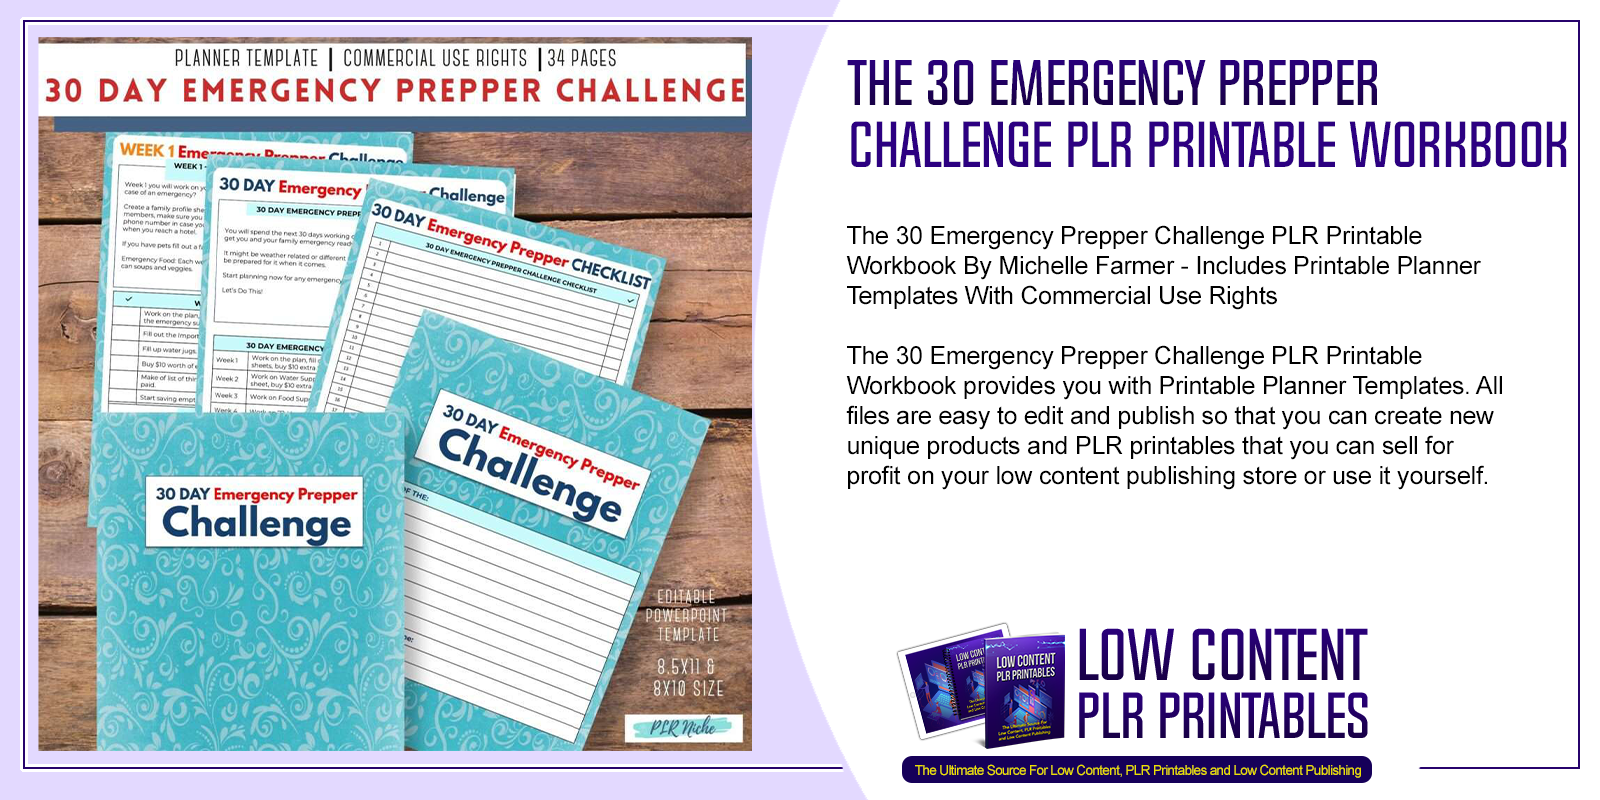 The 30 Emergency Prepper Challenge PLR Printable Workbook